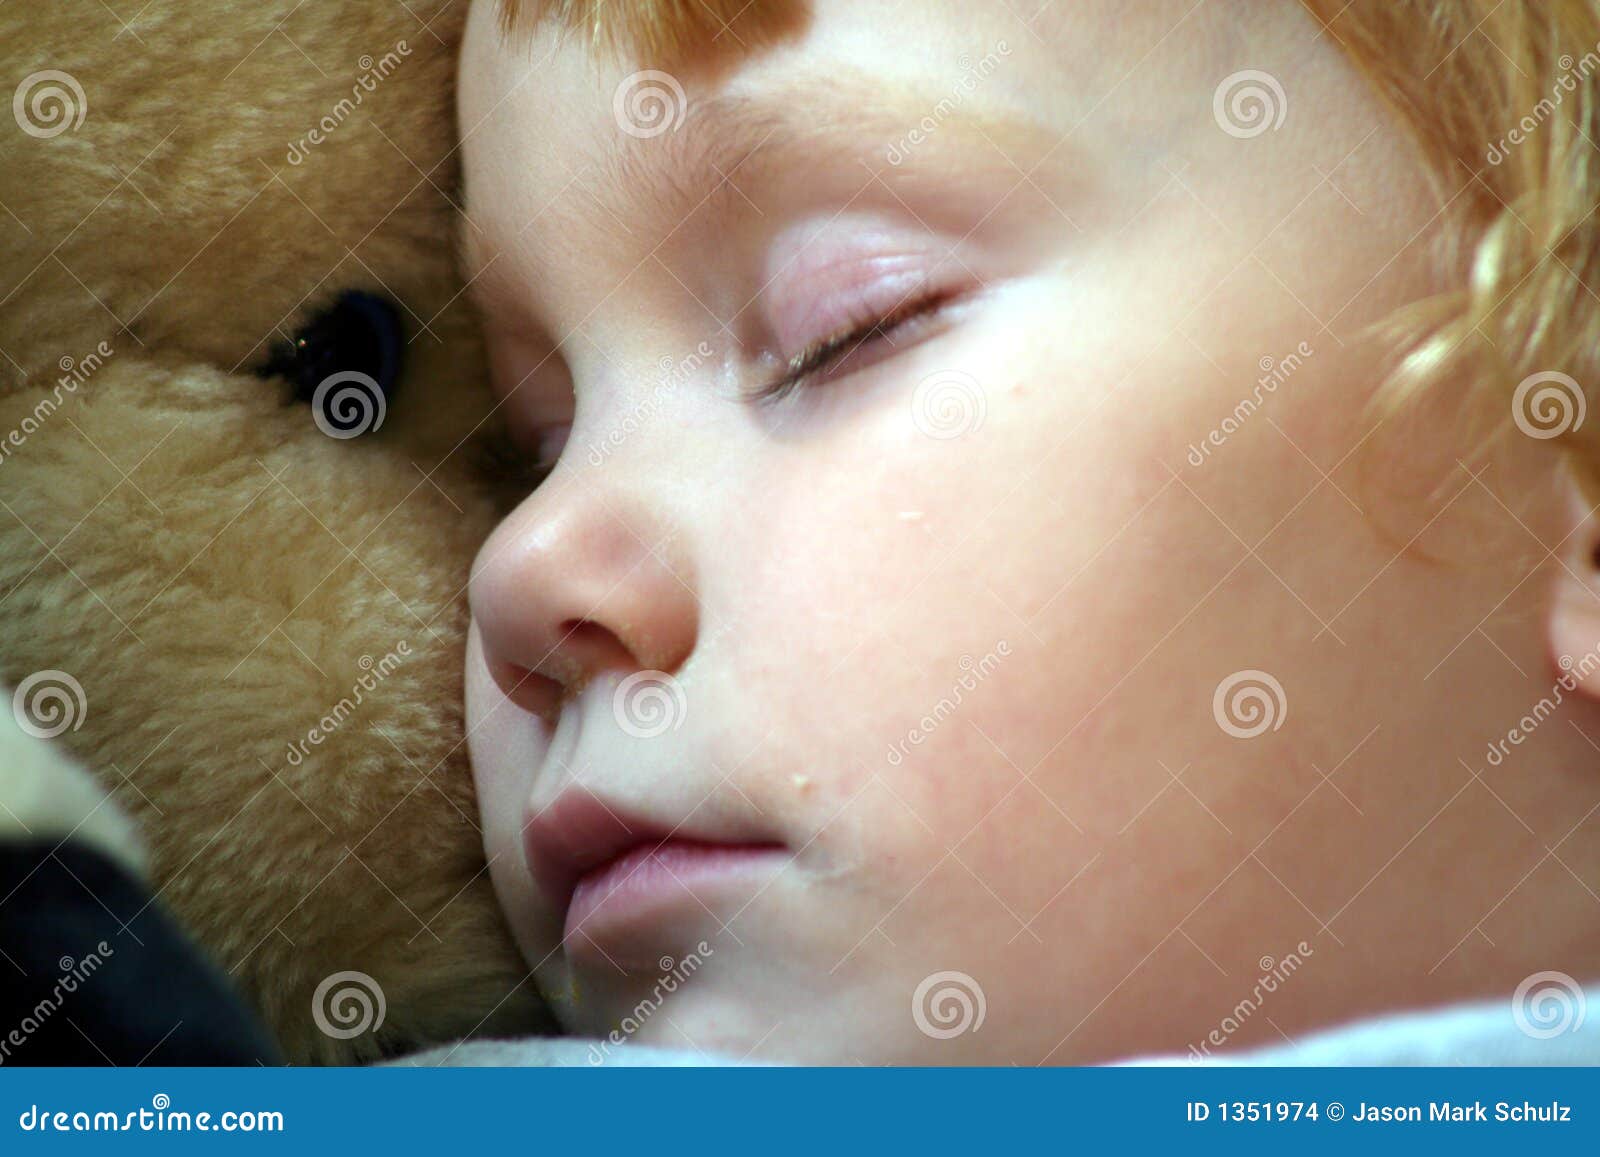 asleep with a stuffed horse 2